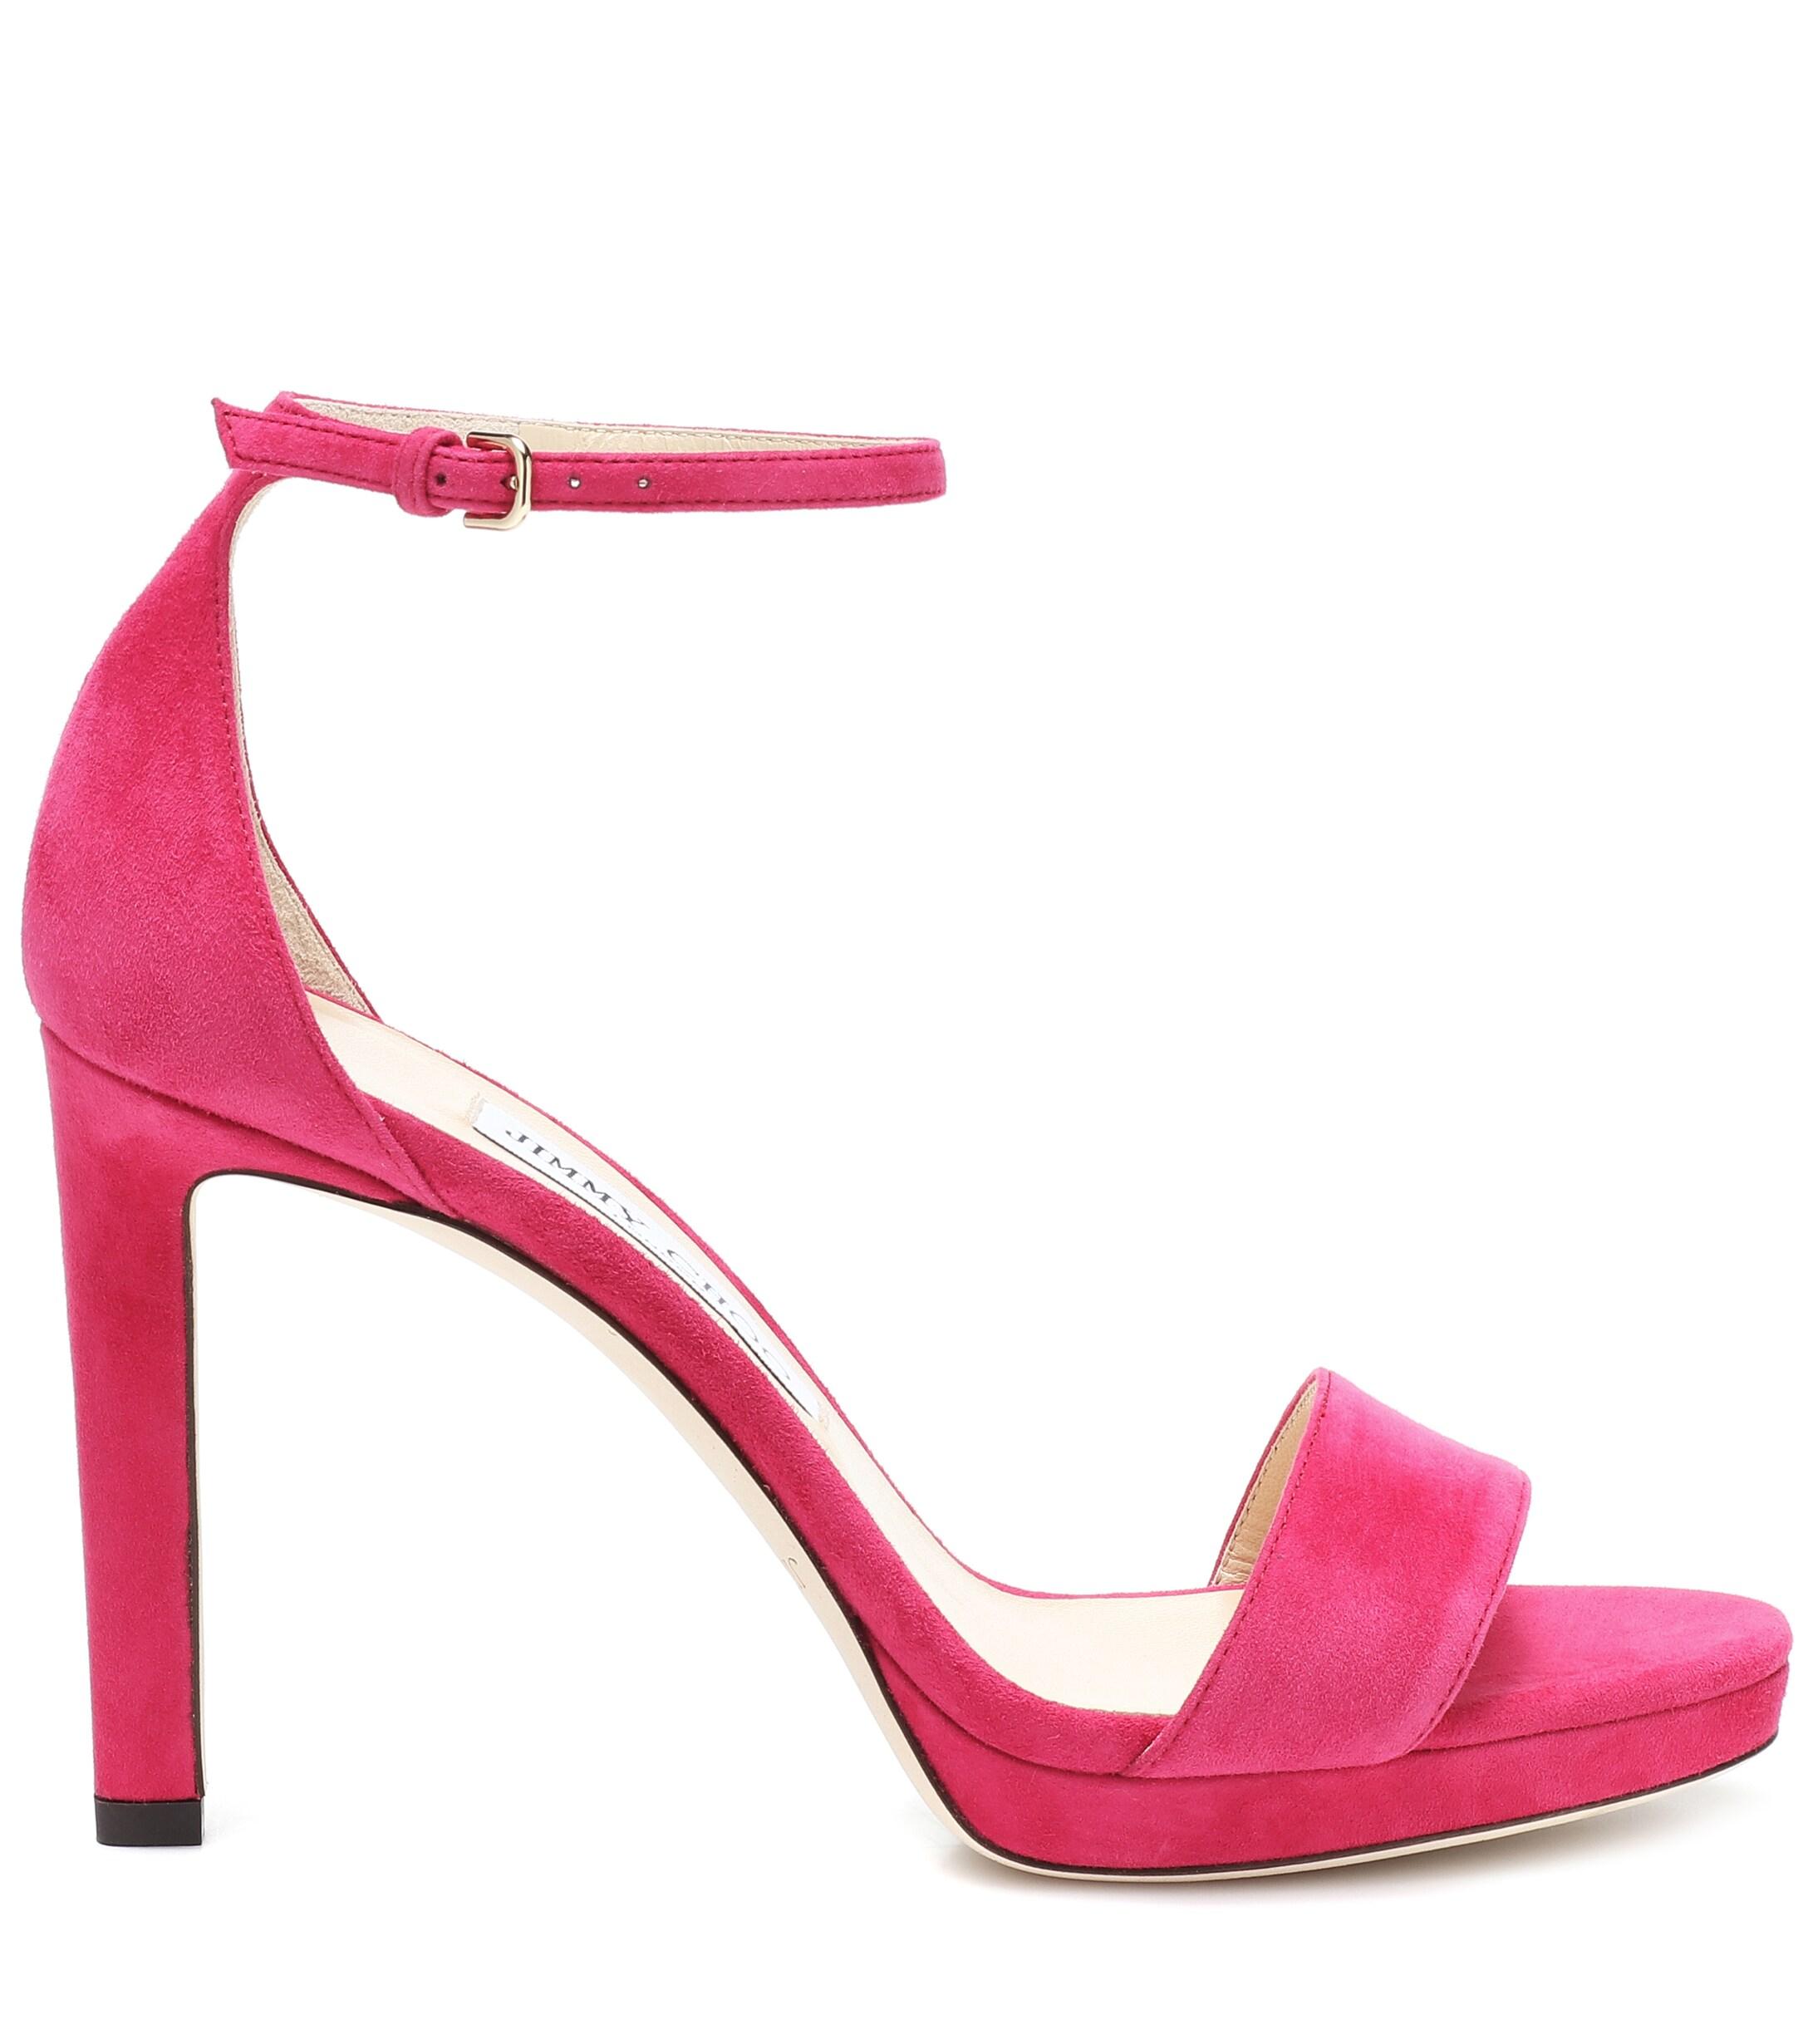 Jimmy Choo Misty 100 Suede Sandals in Raspberry (Pink) - Lyst